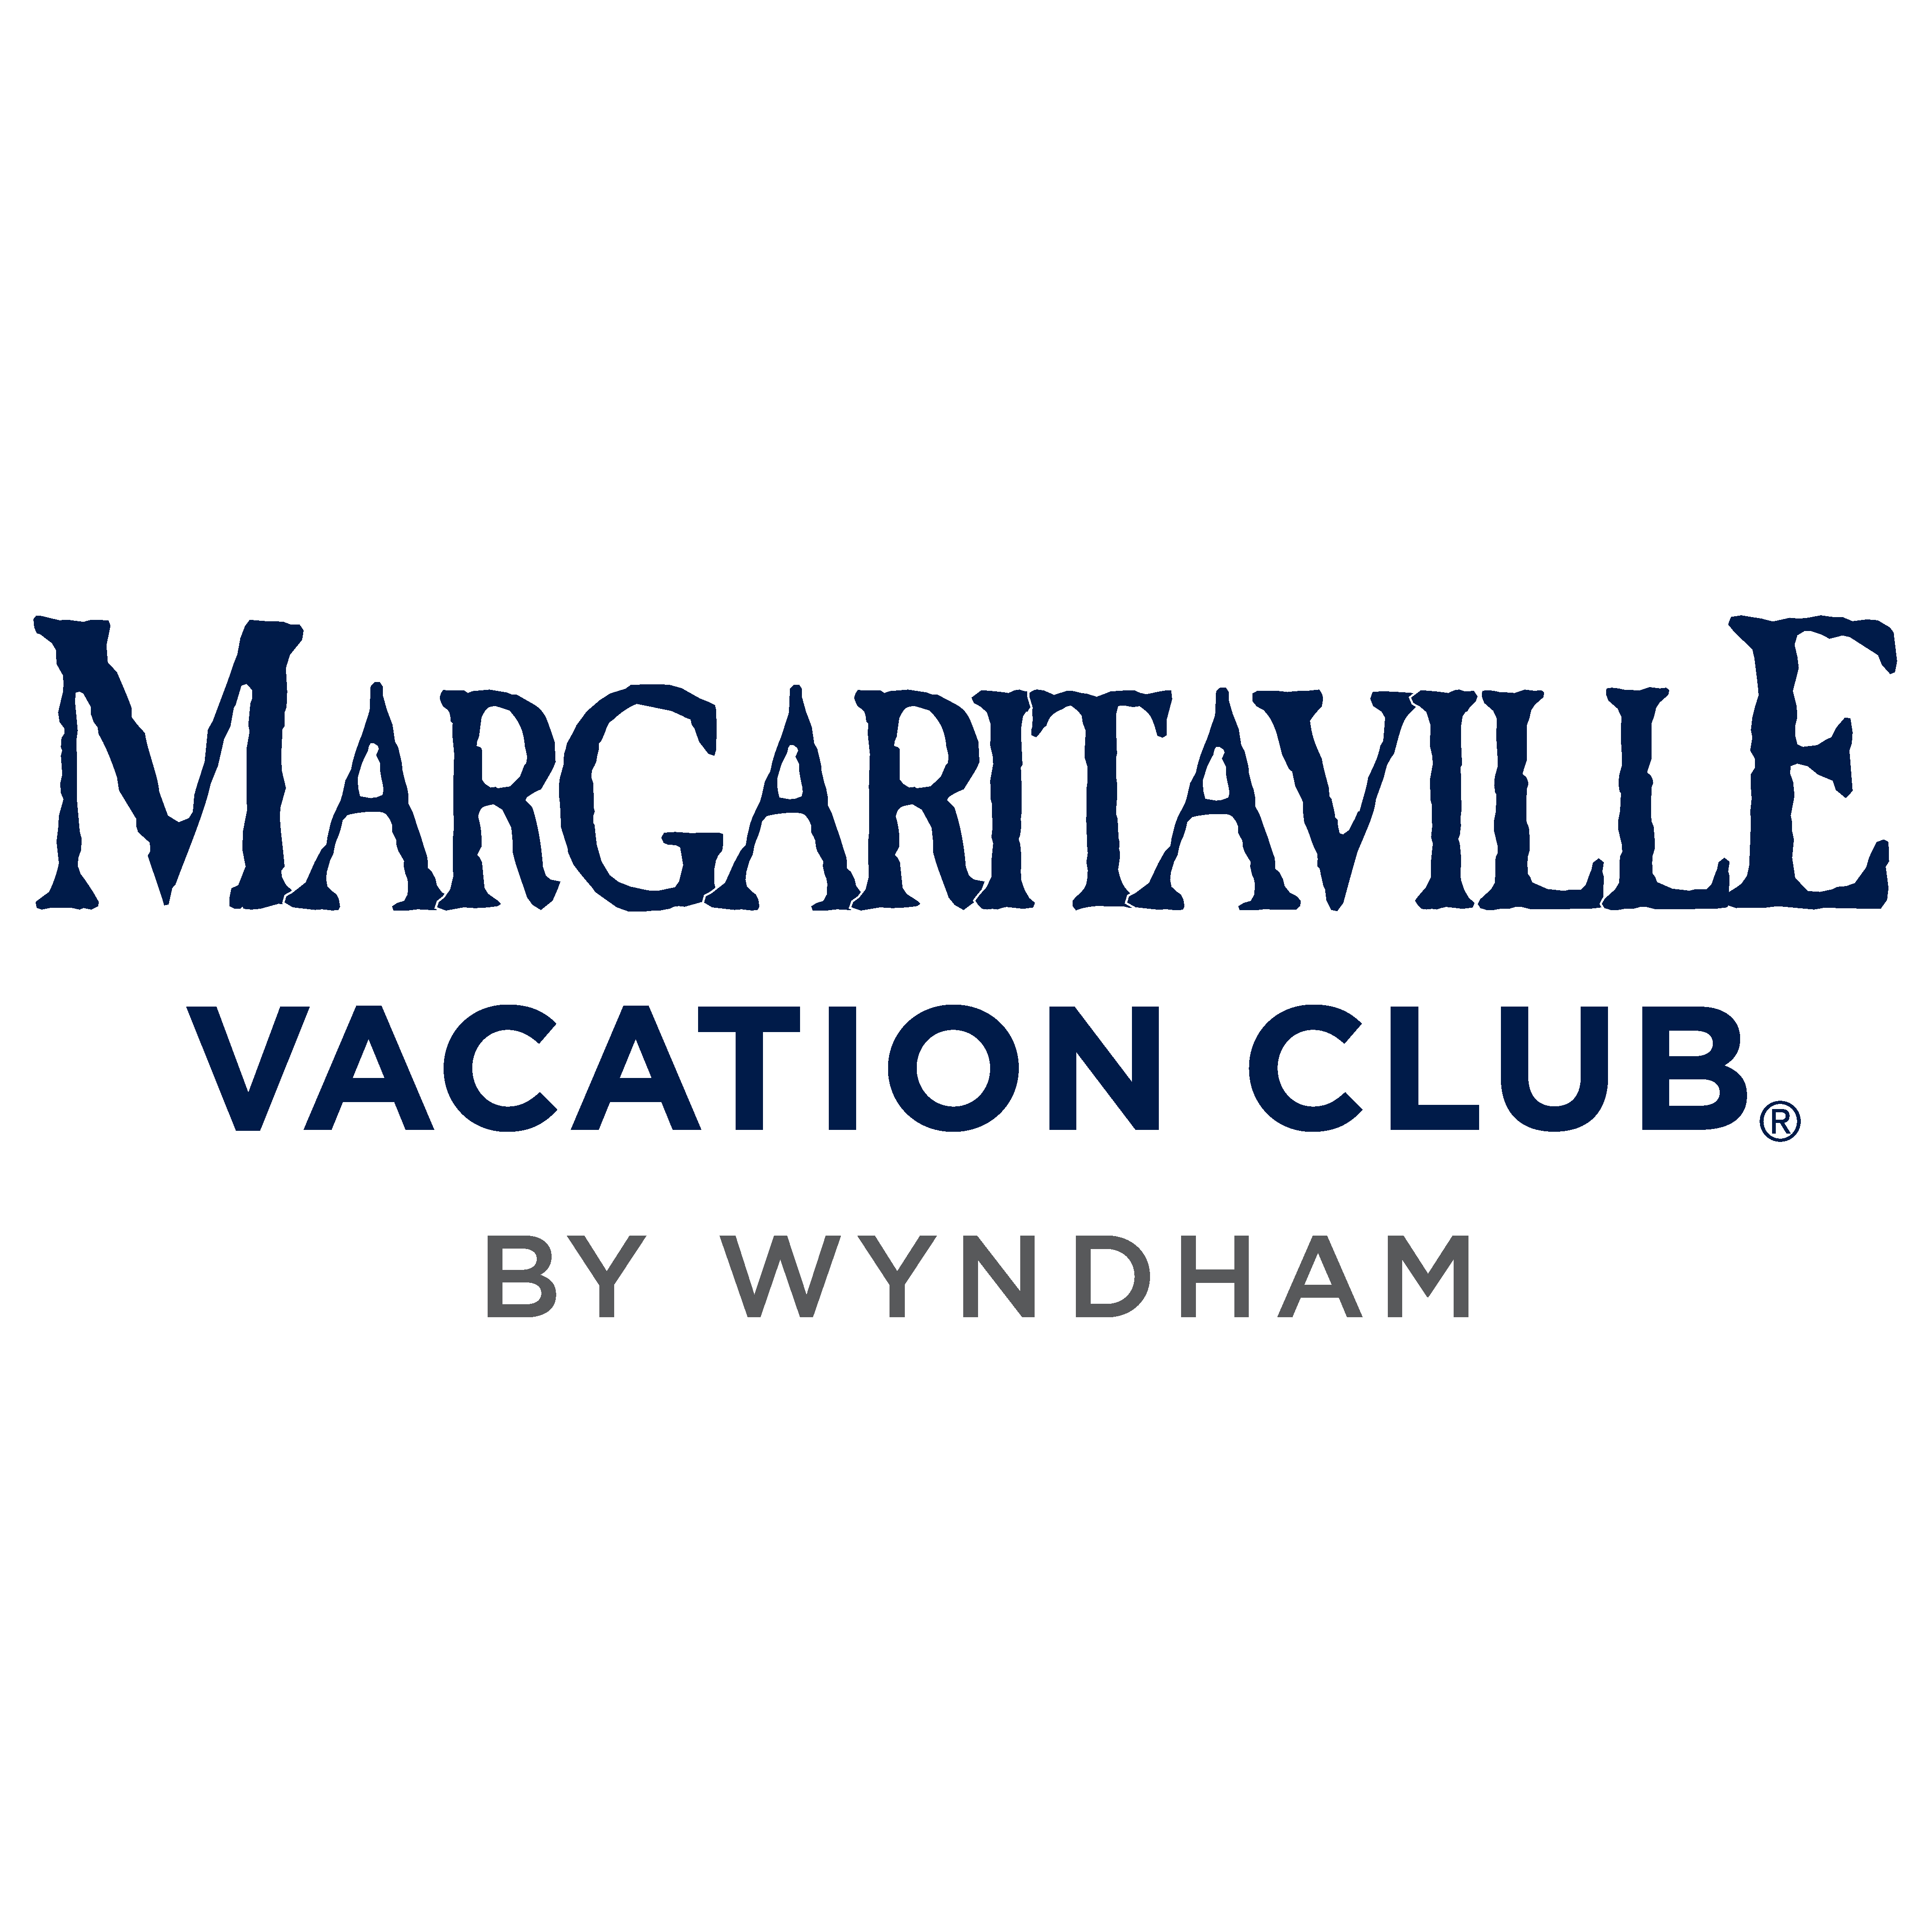 Margaritaville Vacation Club | Proud sponsors of the Decatur Arts Festival